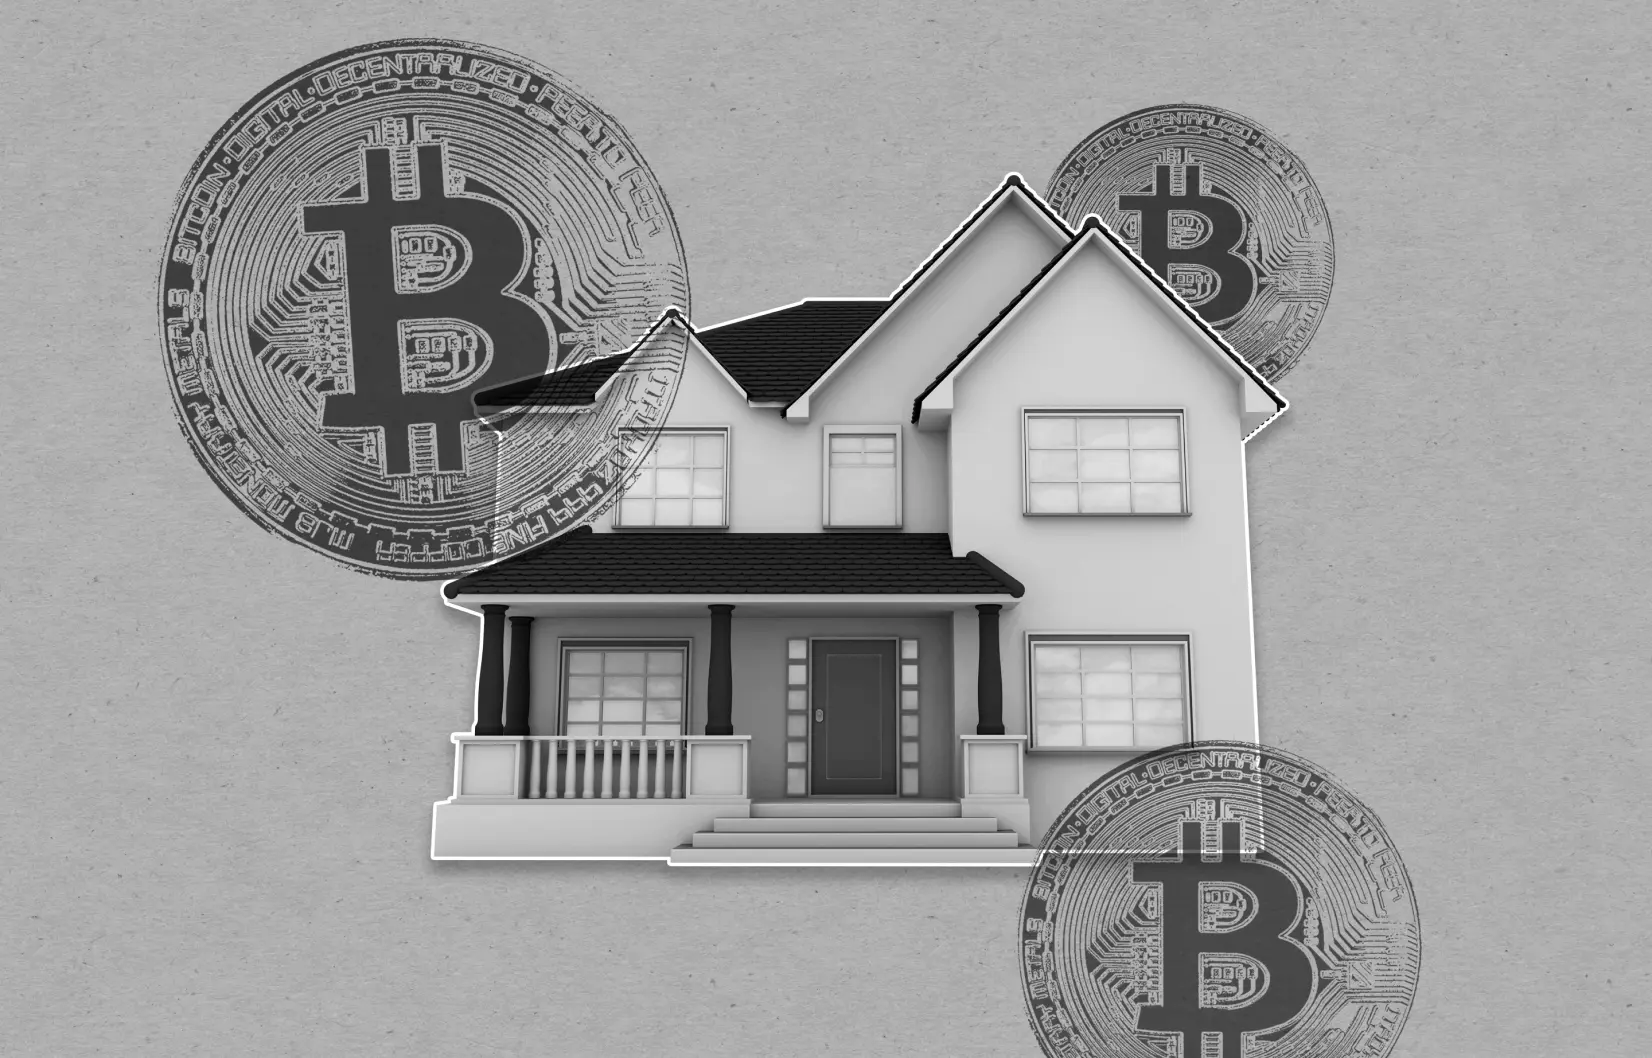 Two story house with three bitcoin symbols